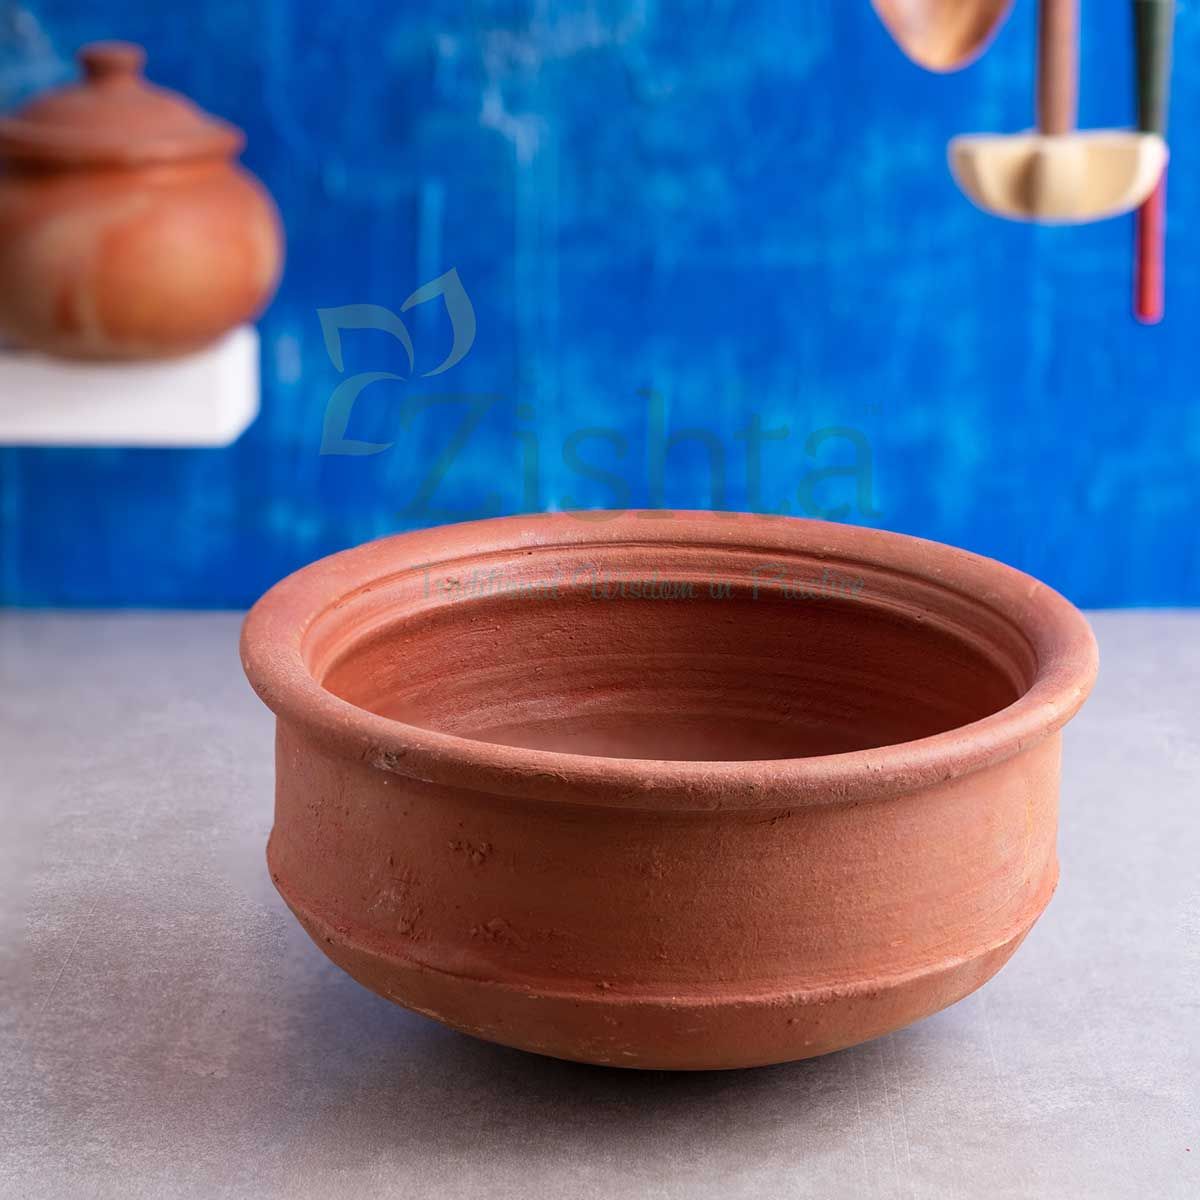 Zishta hand-crafted soapstone cookware